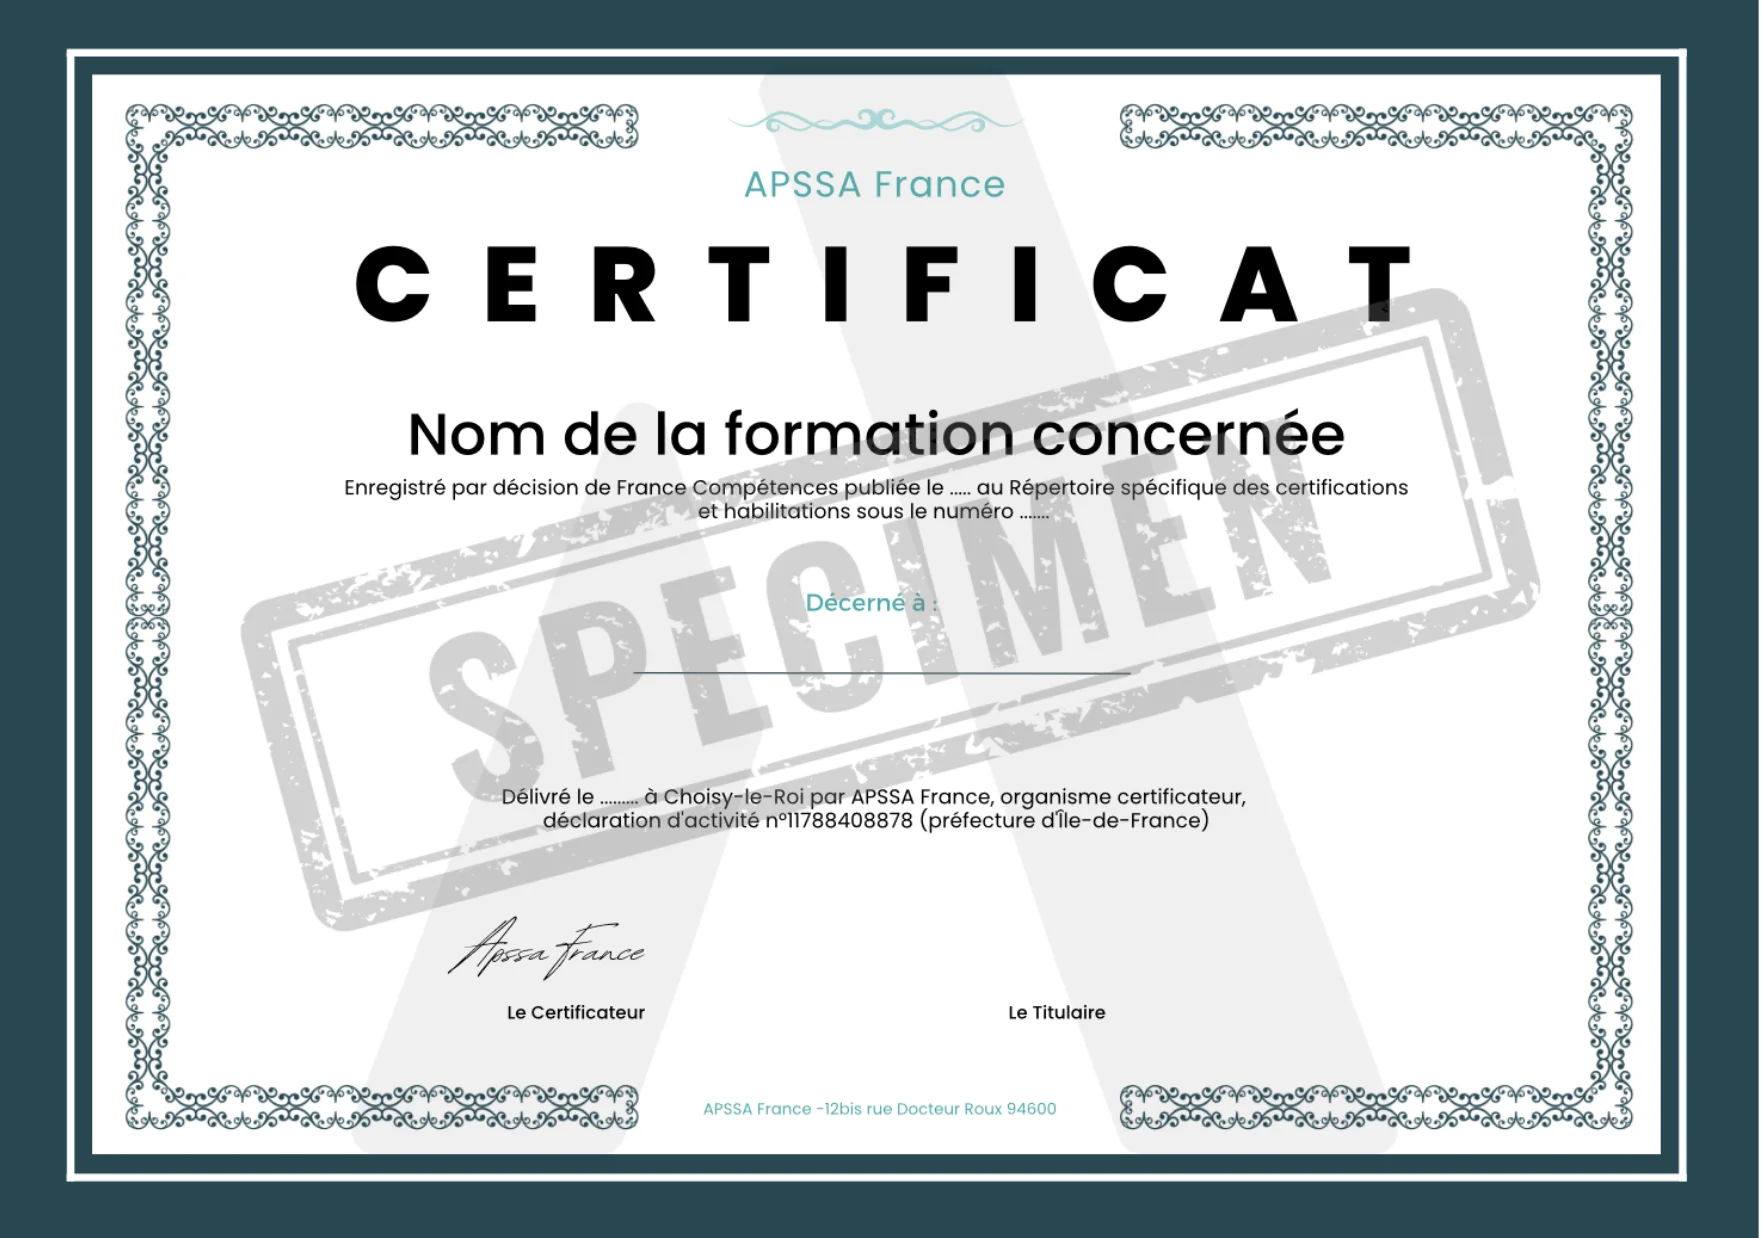 Image Certificat APSSA France